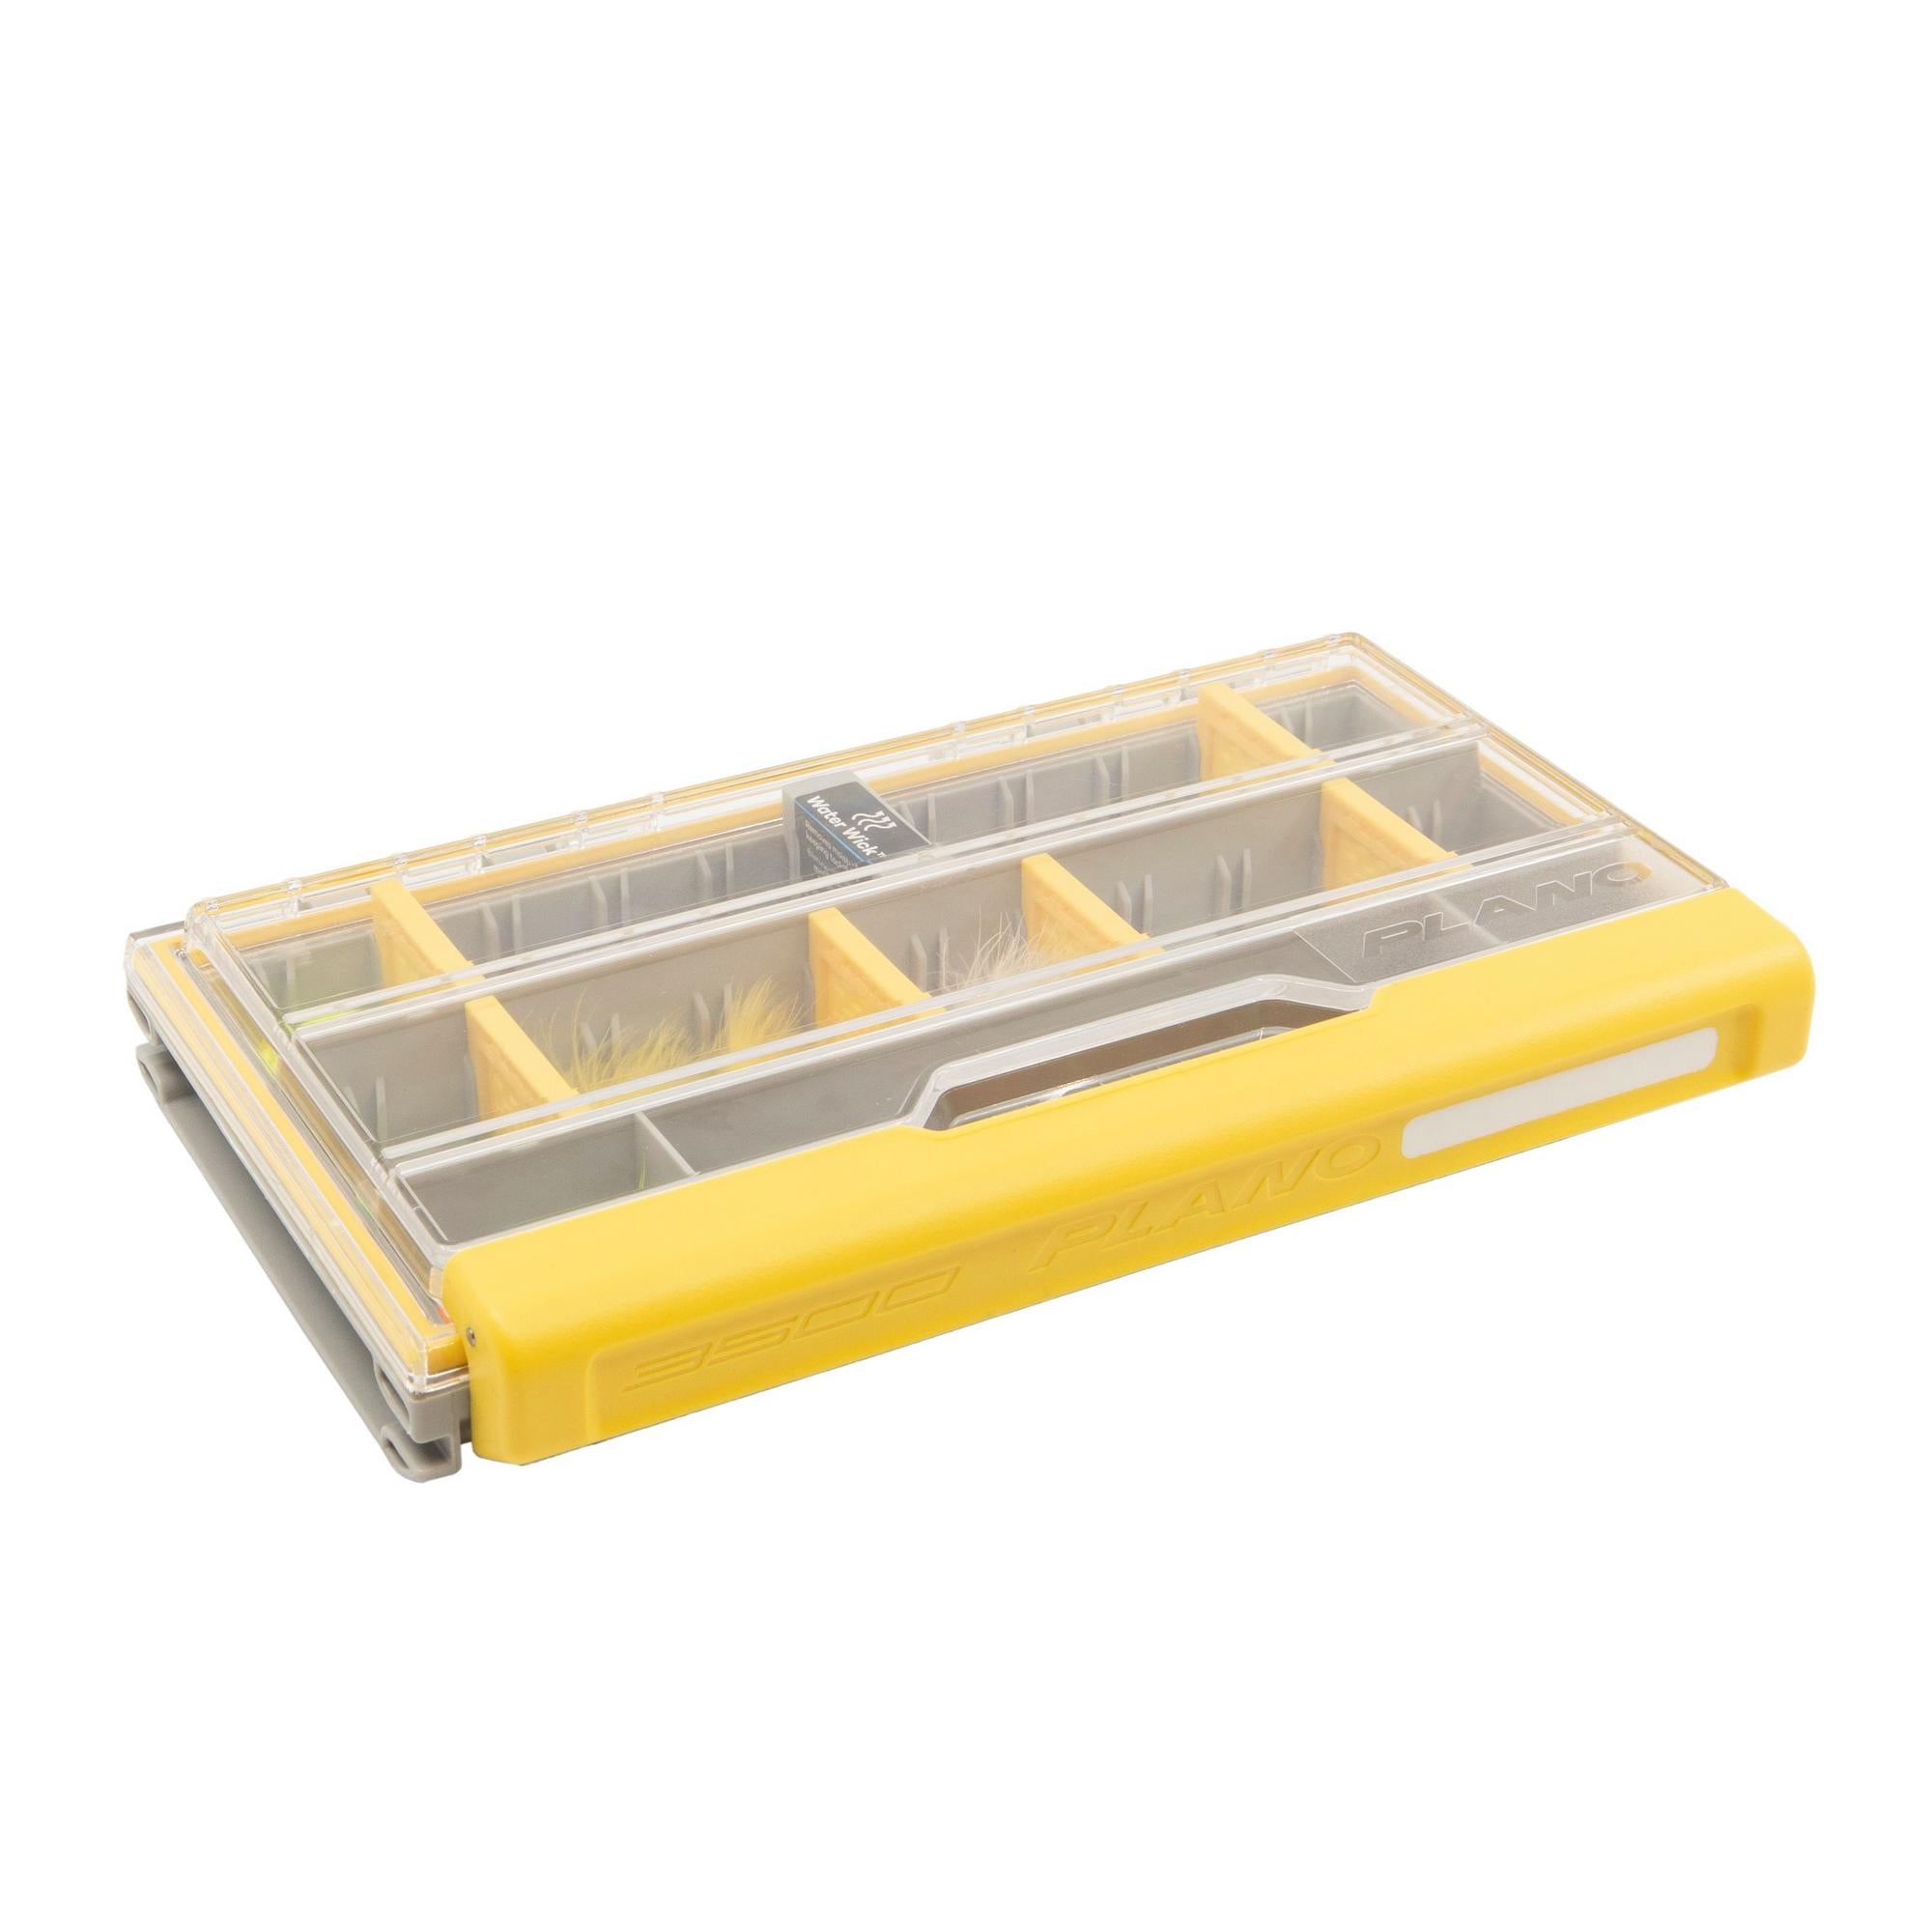 SPRO Box Waterproof Tackle Tray 3500